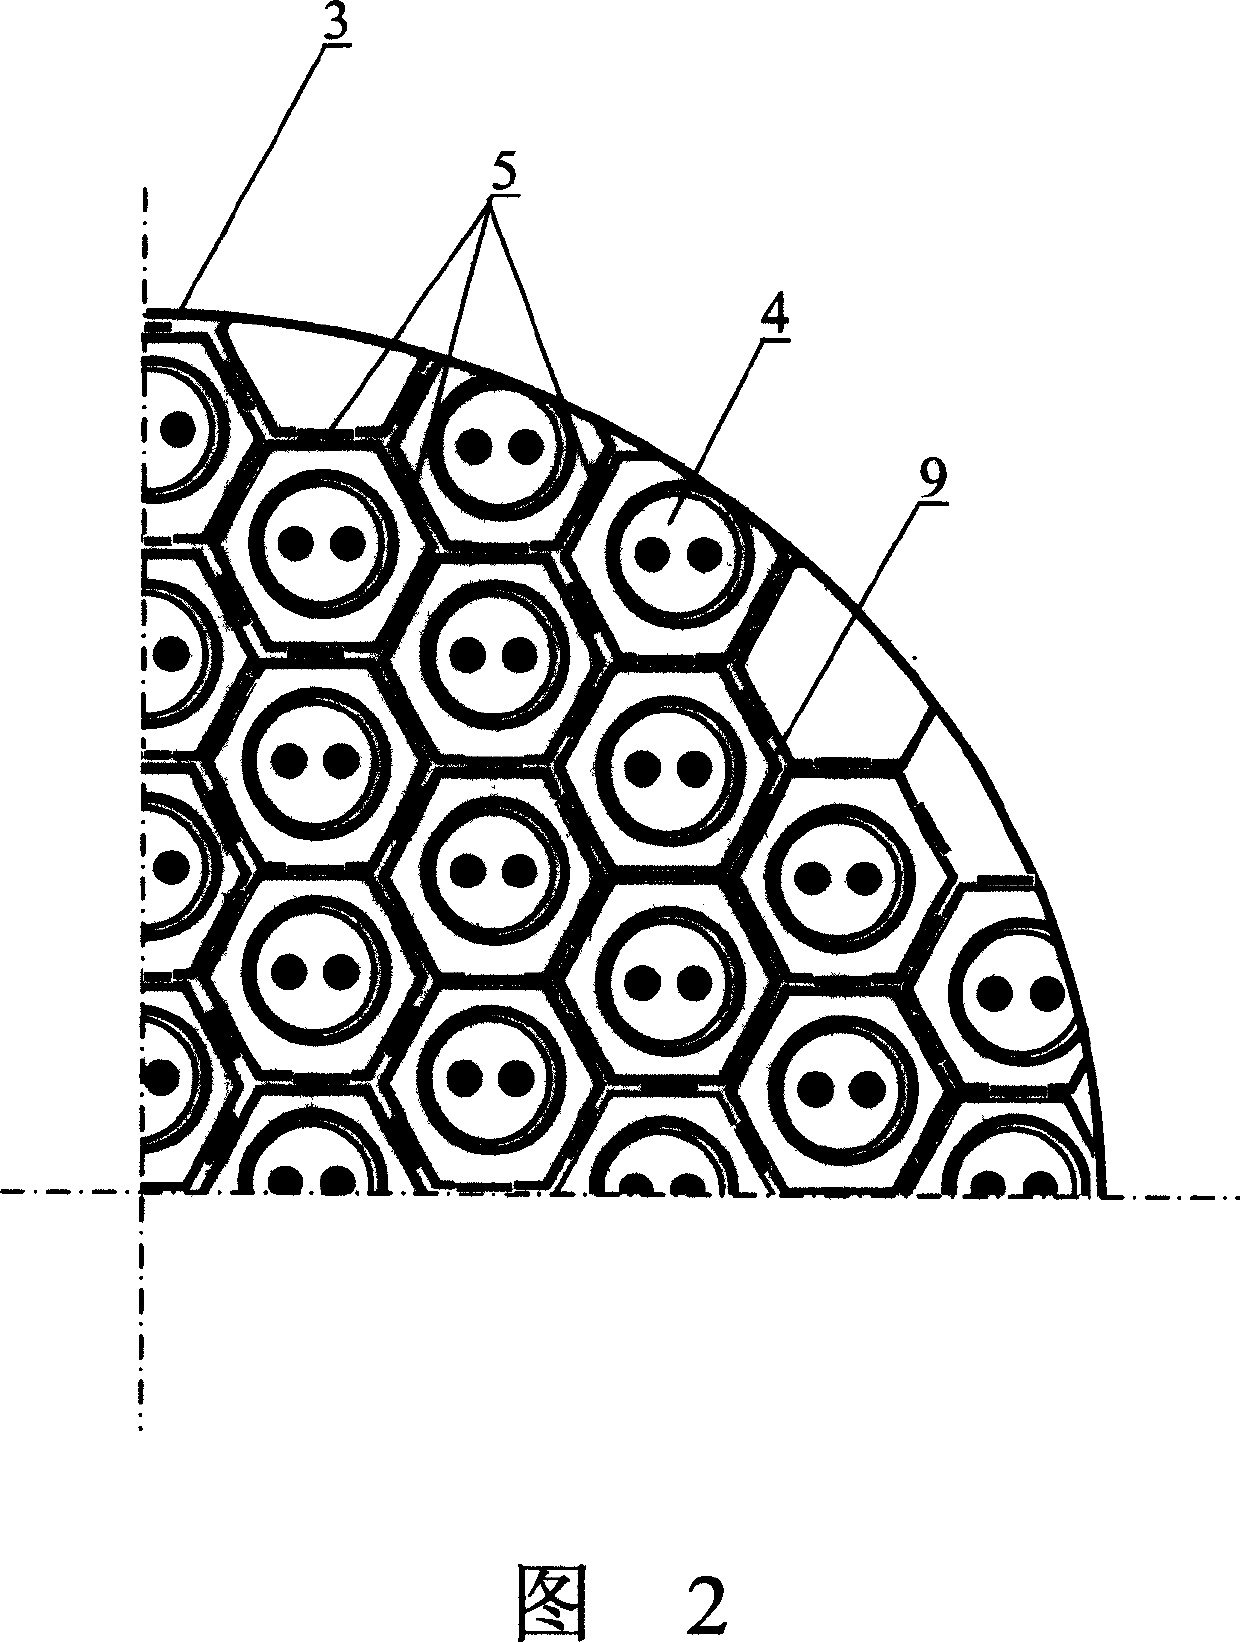 Optical-thermal coupling air purifier having honeycomb arrangement